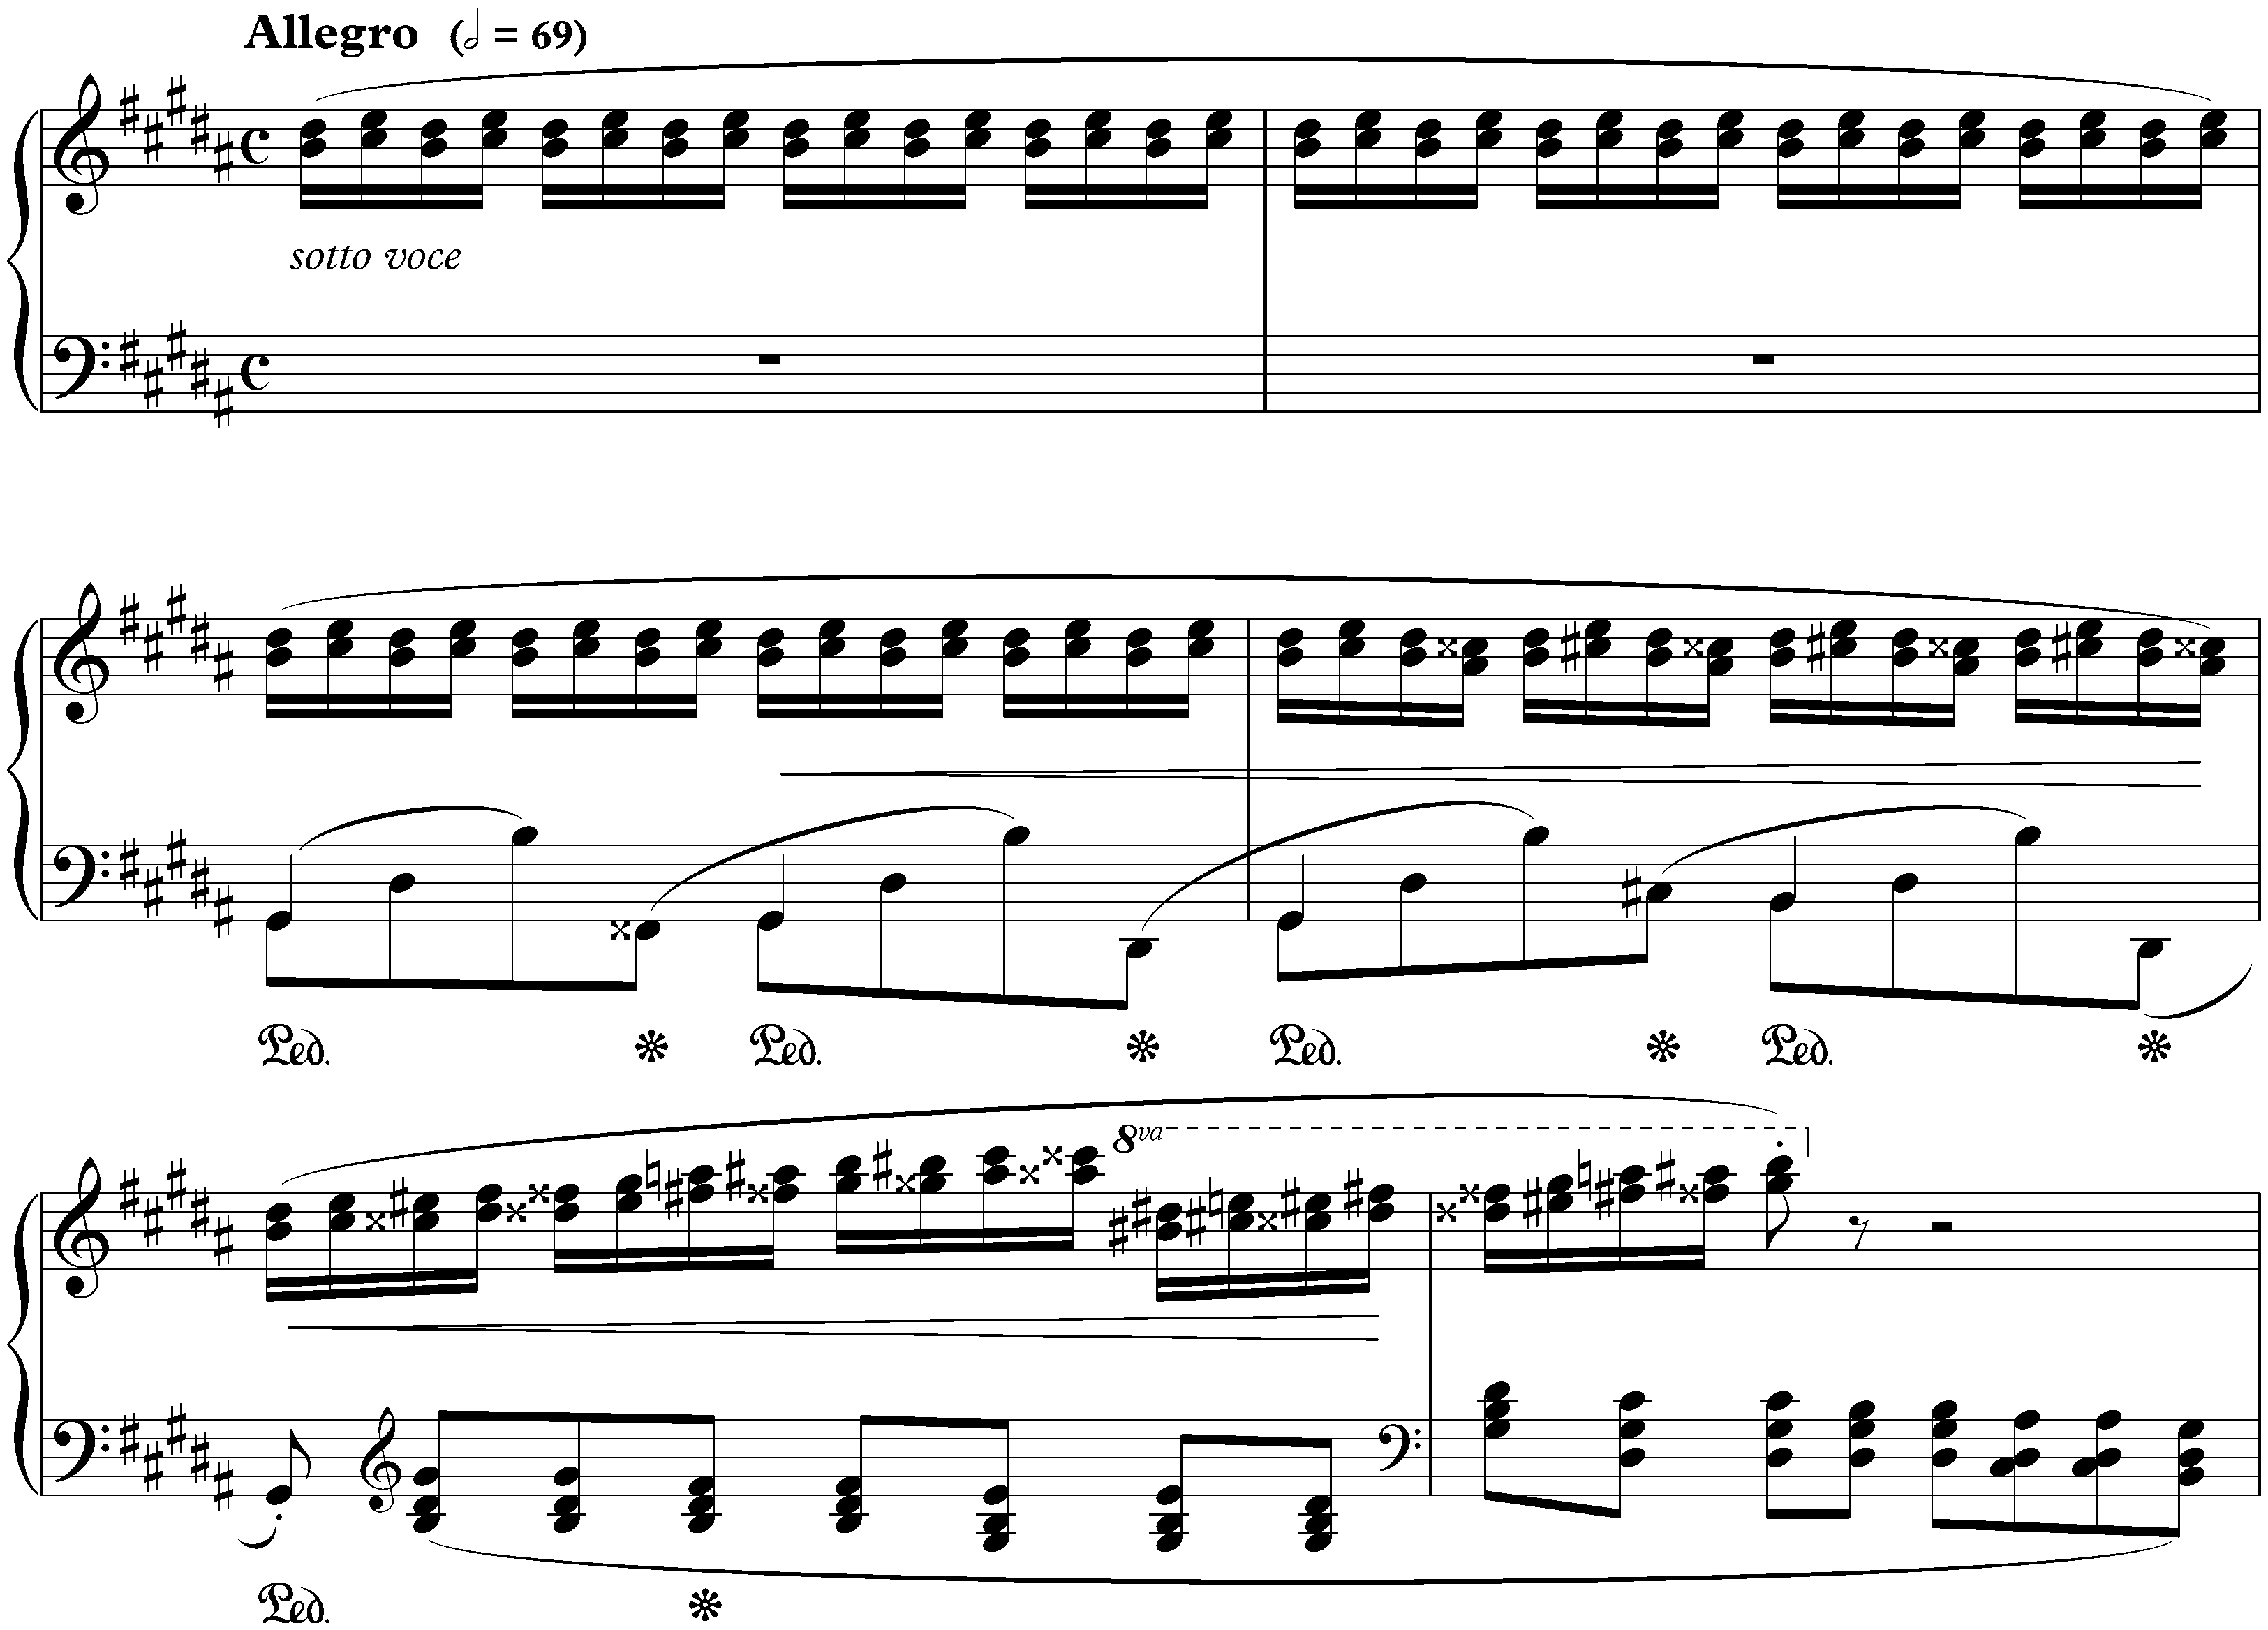 Twelve Études, op. 25; 6. G-sharp minor